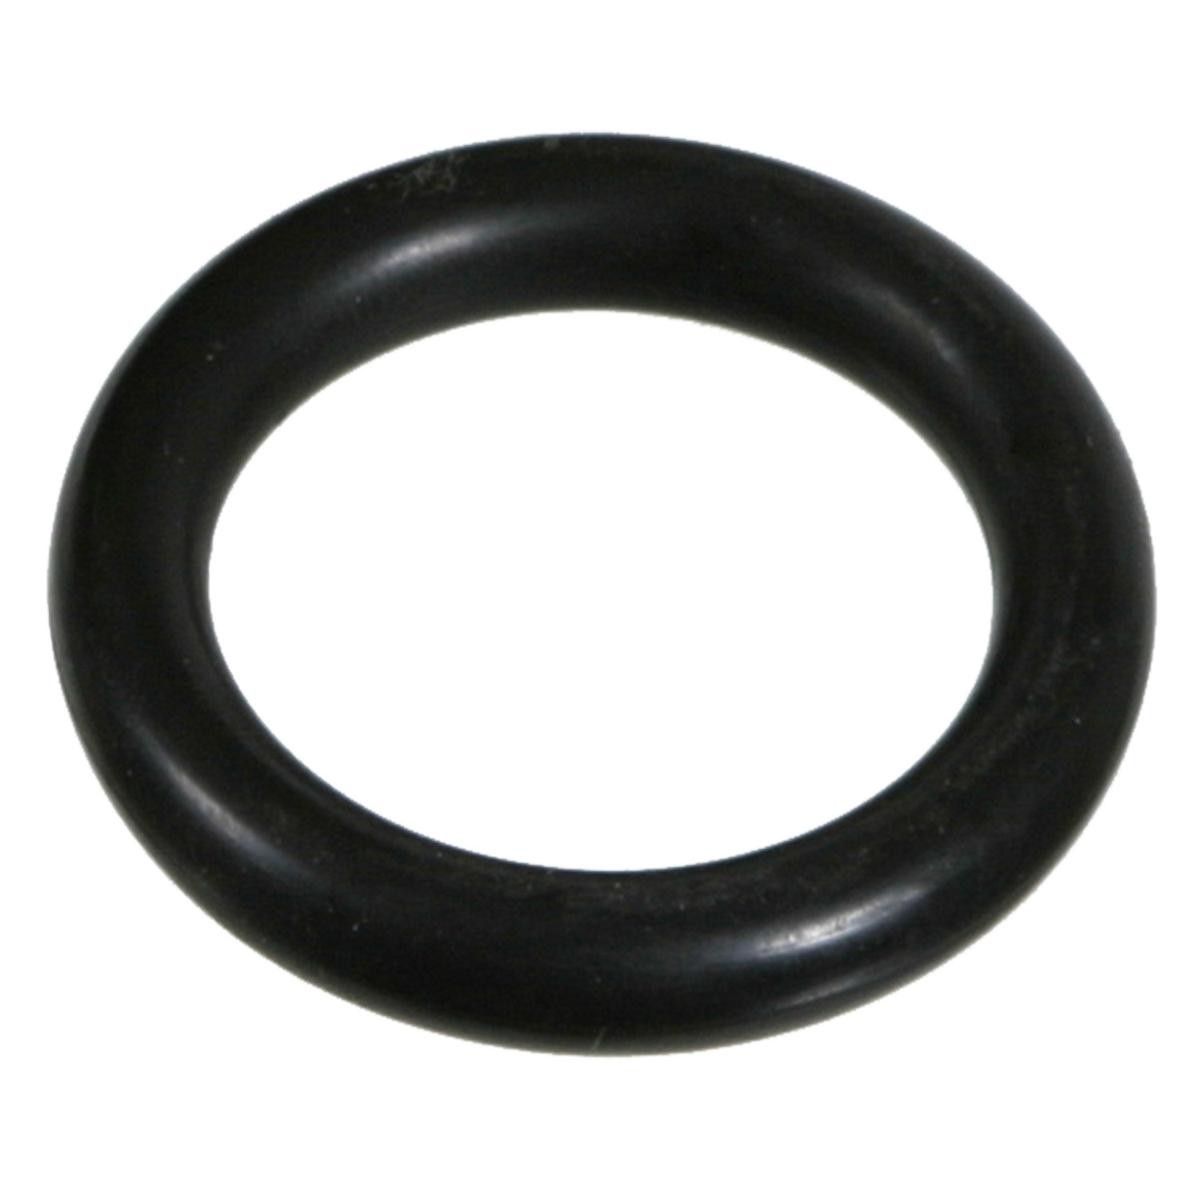 FEBI BILSTEIN 31,5 x 6,5 mm, NBR (nitrile butadiene rubber) Seal Ring 02344 buy